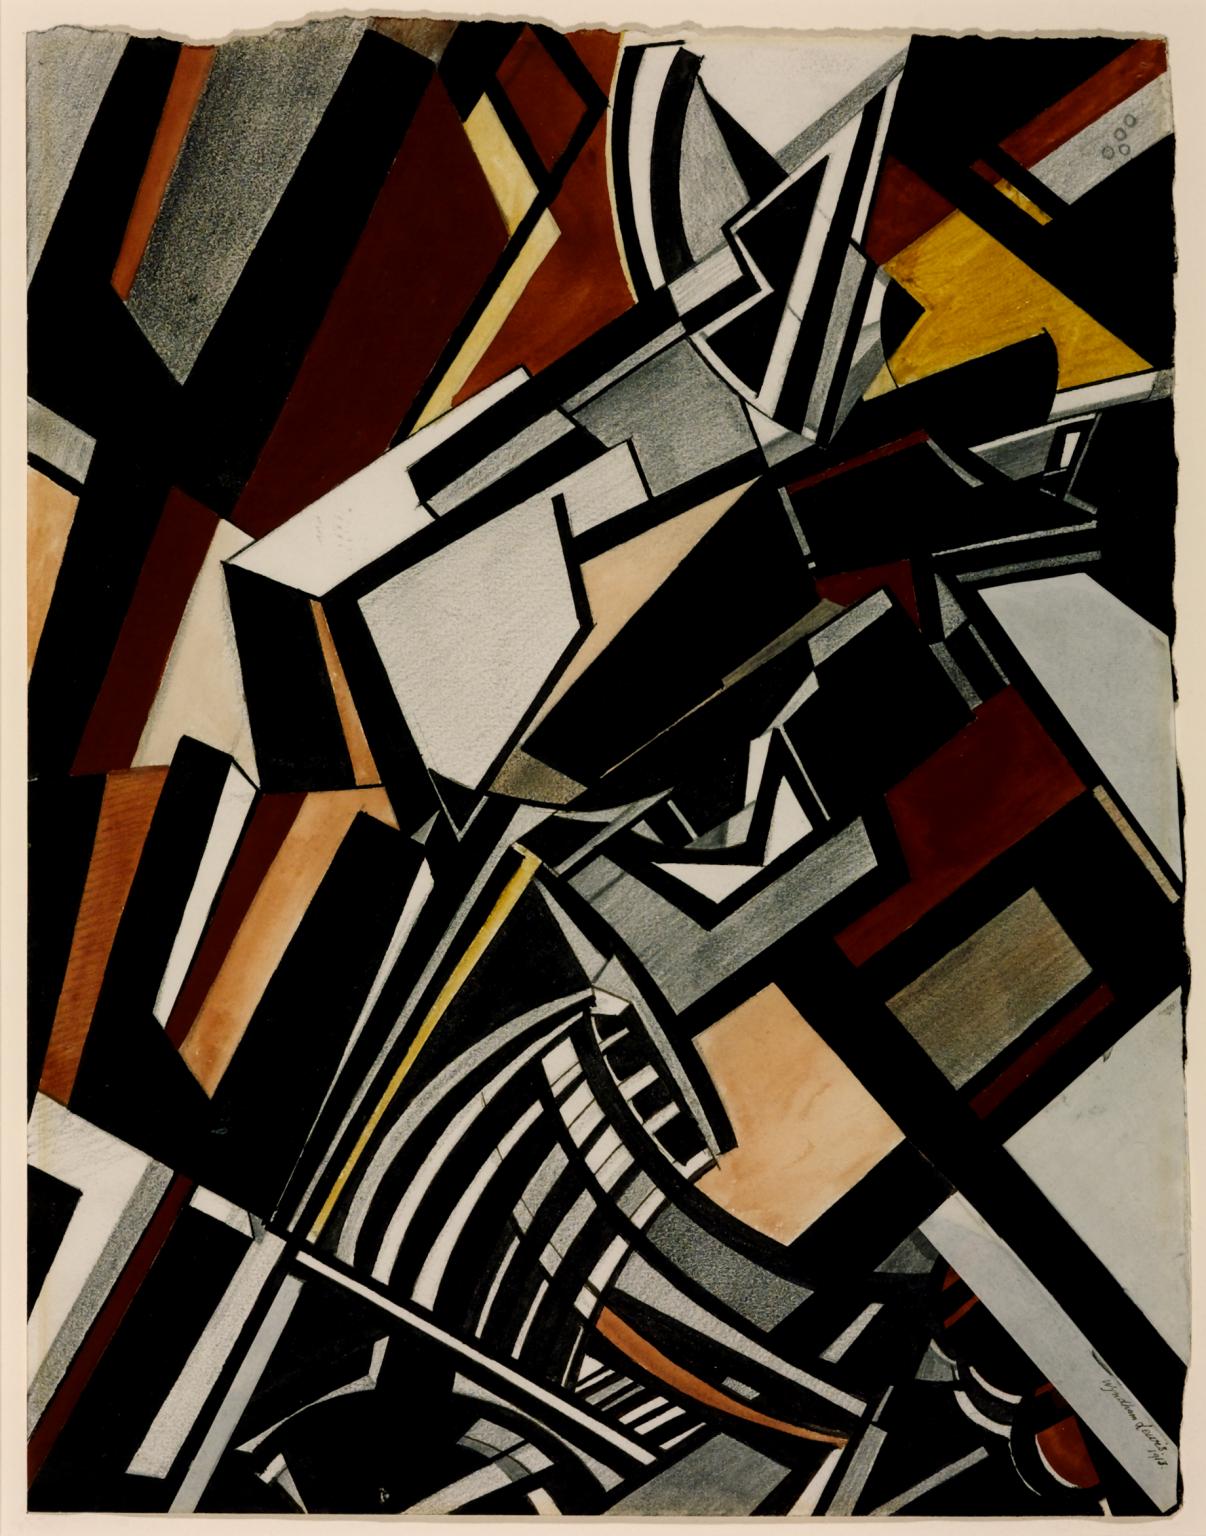 Percy Wyndham Lewis, Percy Wyndham Lewis, Composition, 1913, Tate, London, UK. 